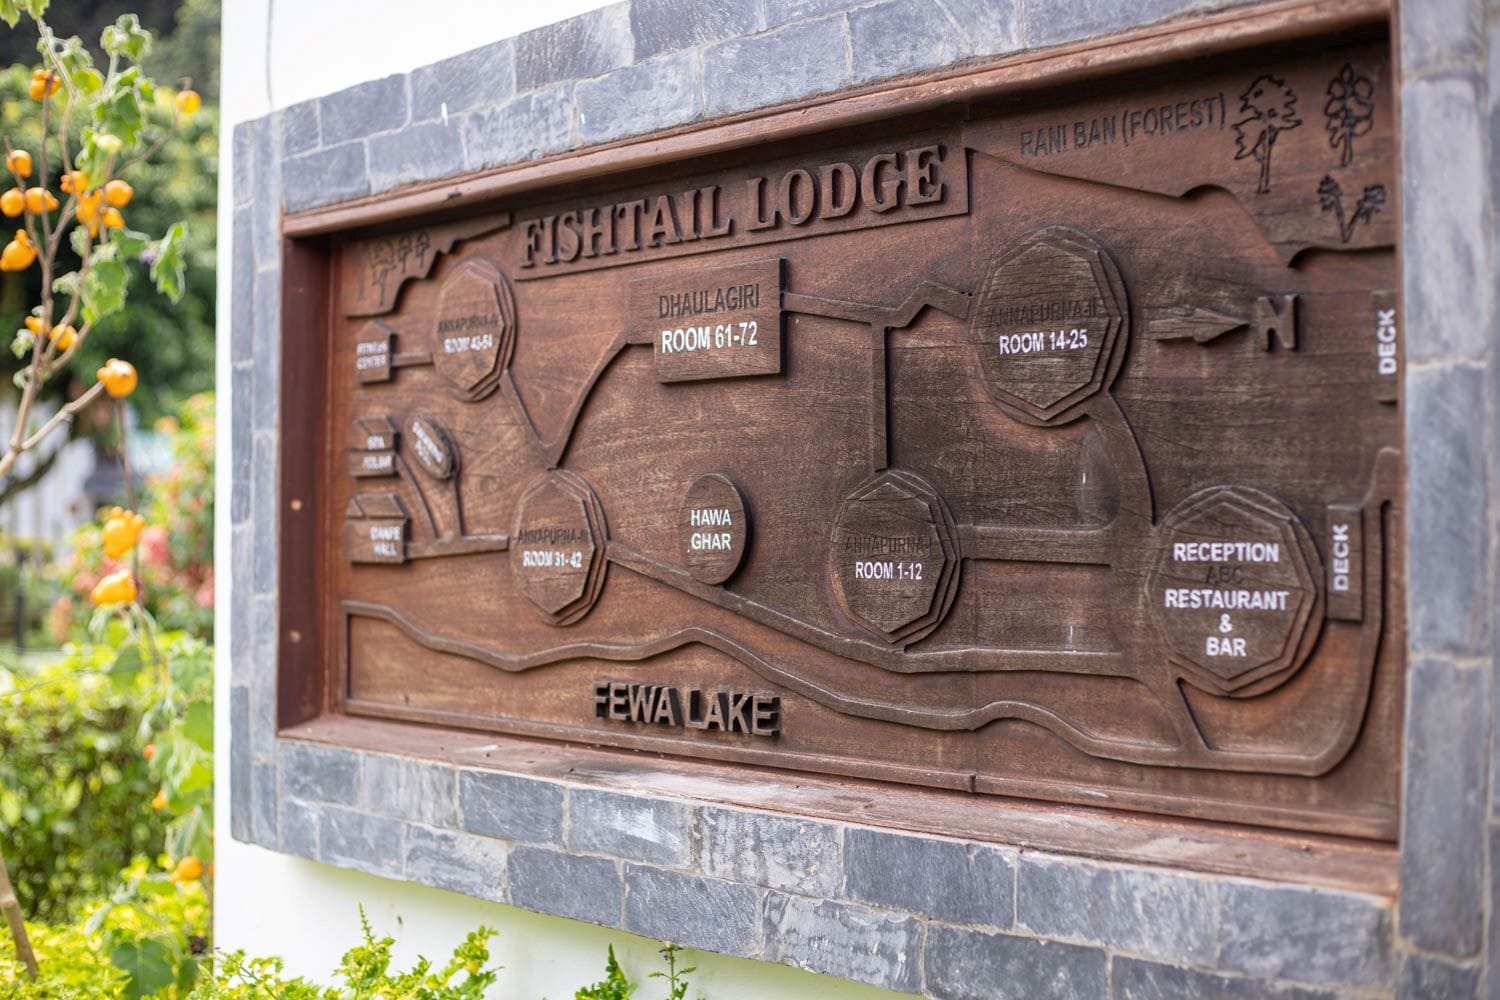 Fish Tail Lodge